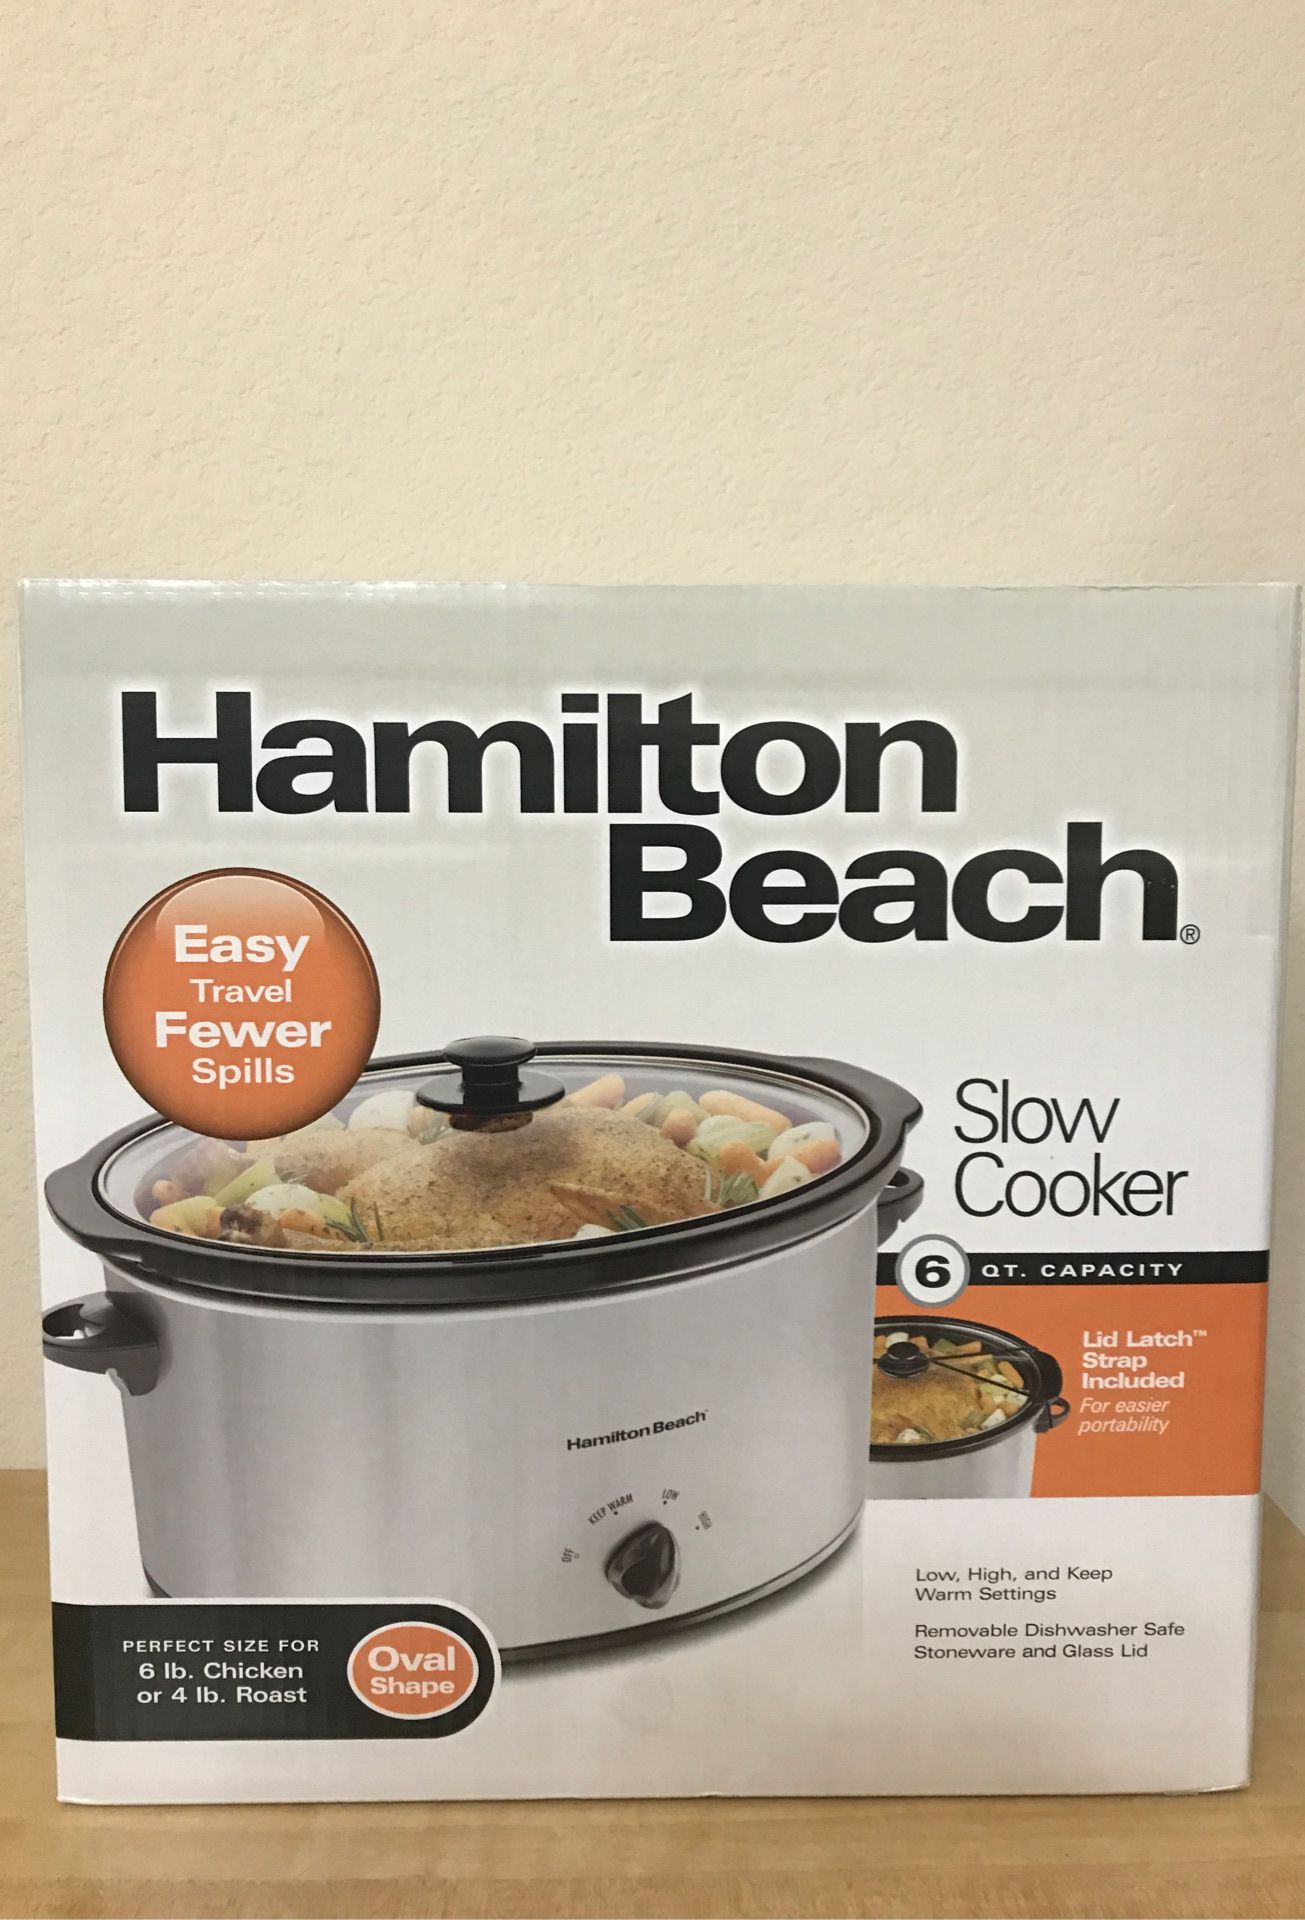 Slow cooker hamilton beach